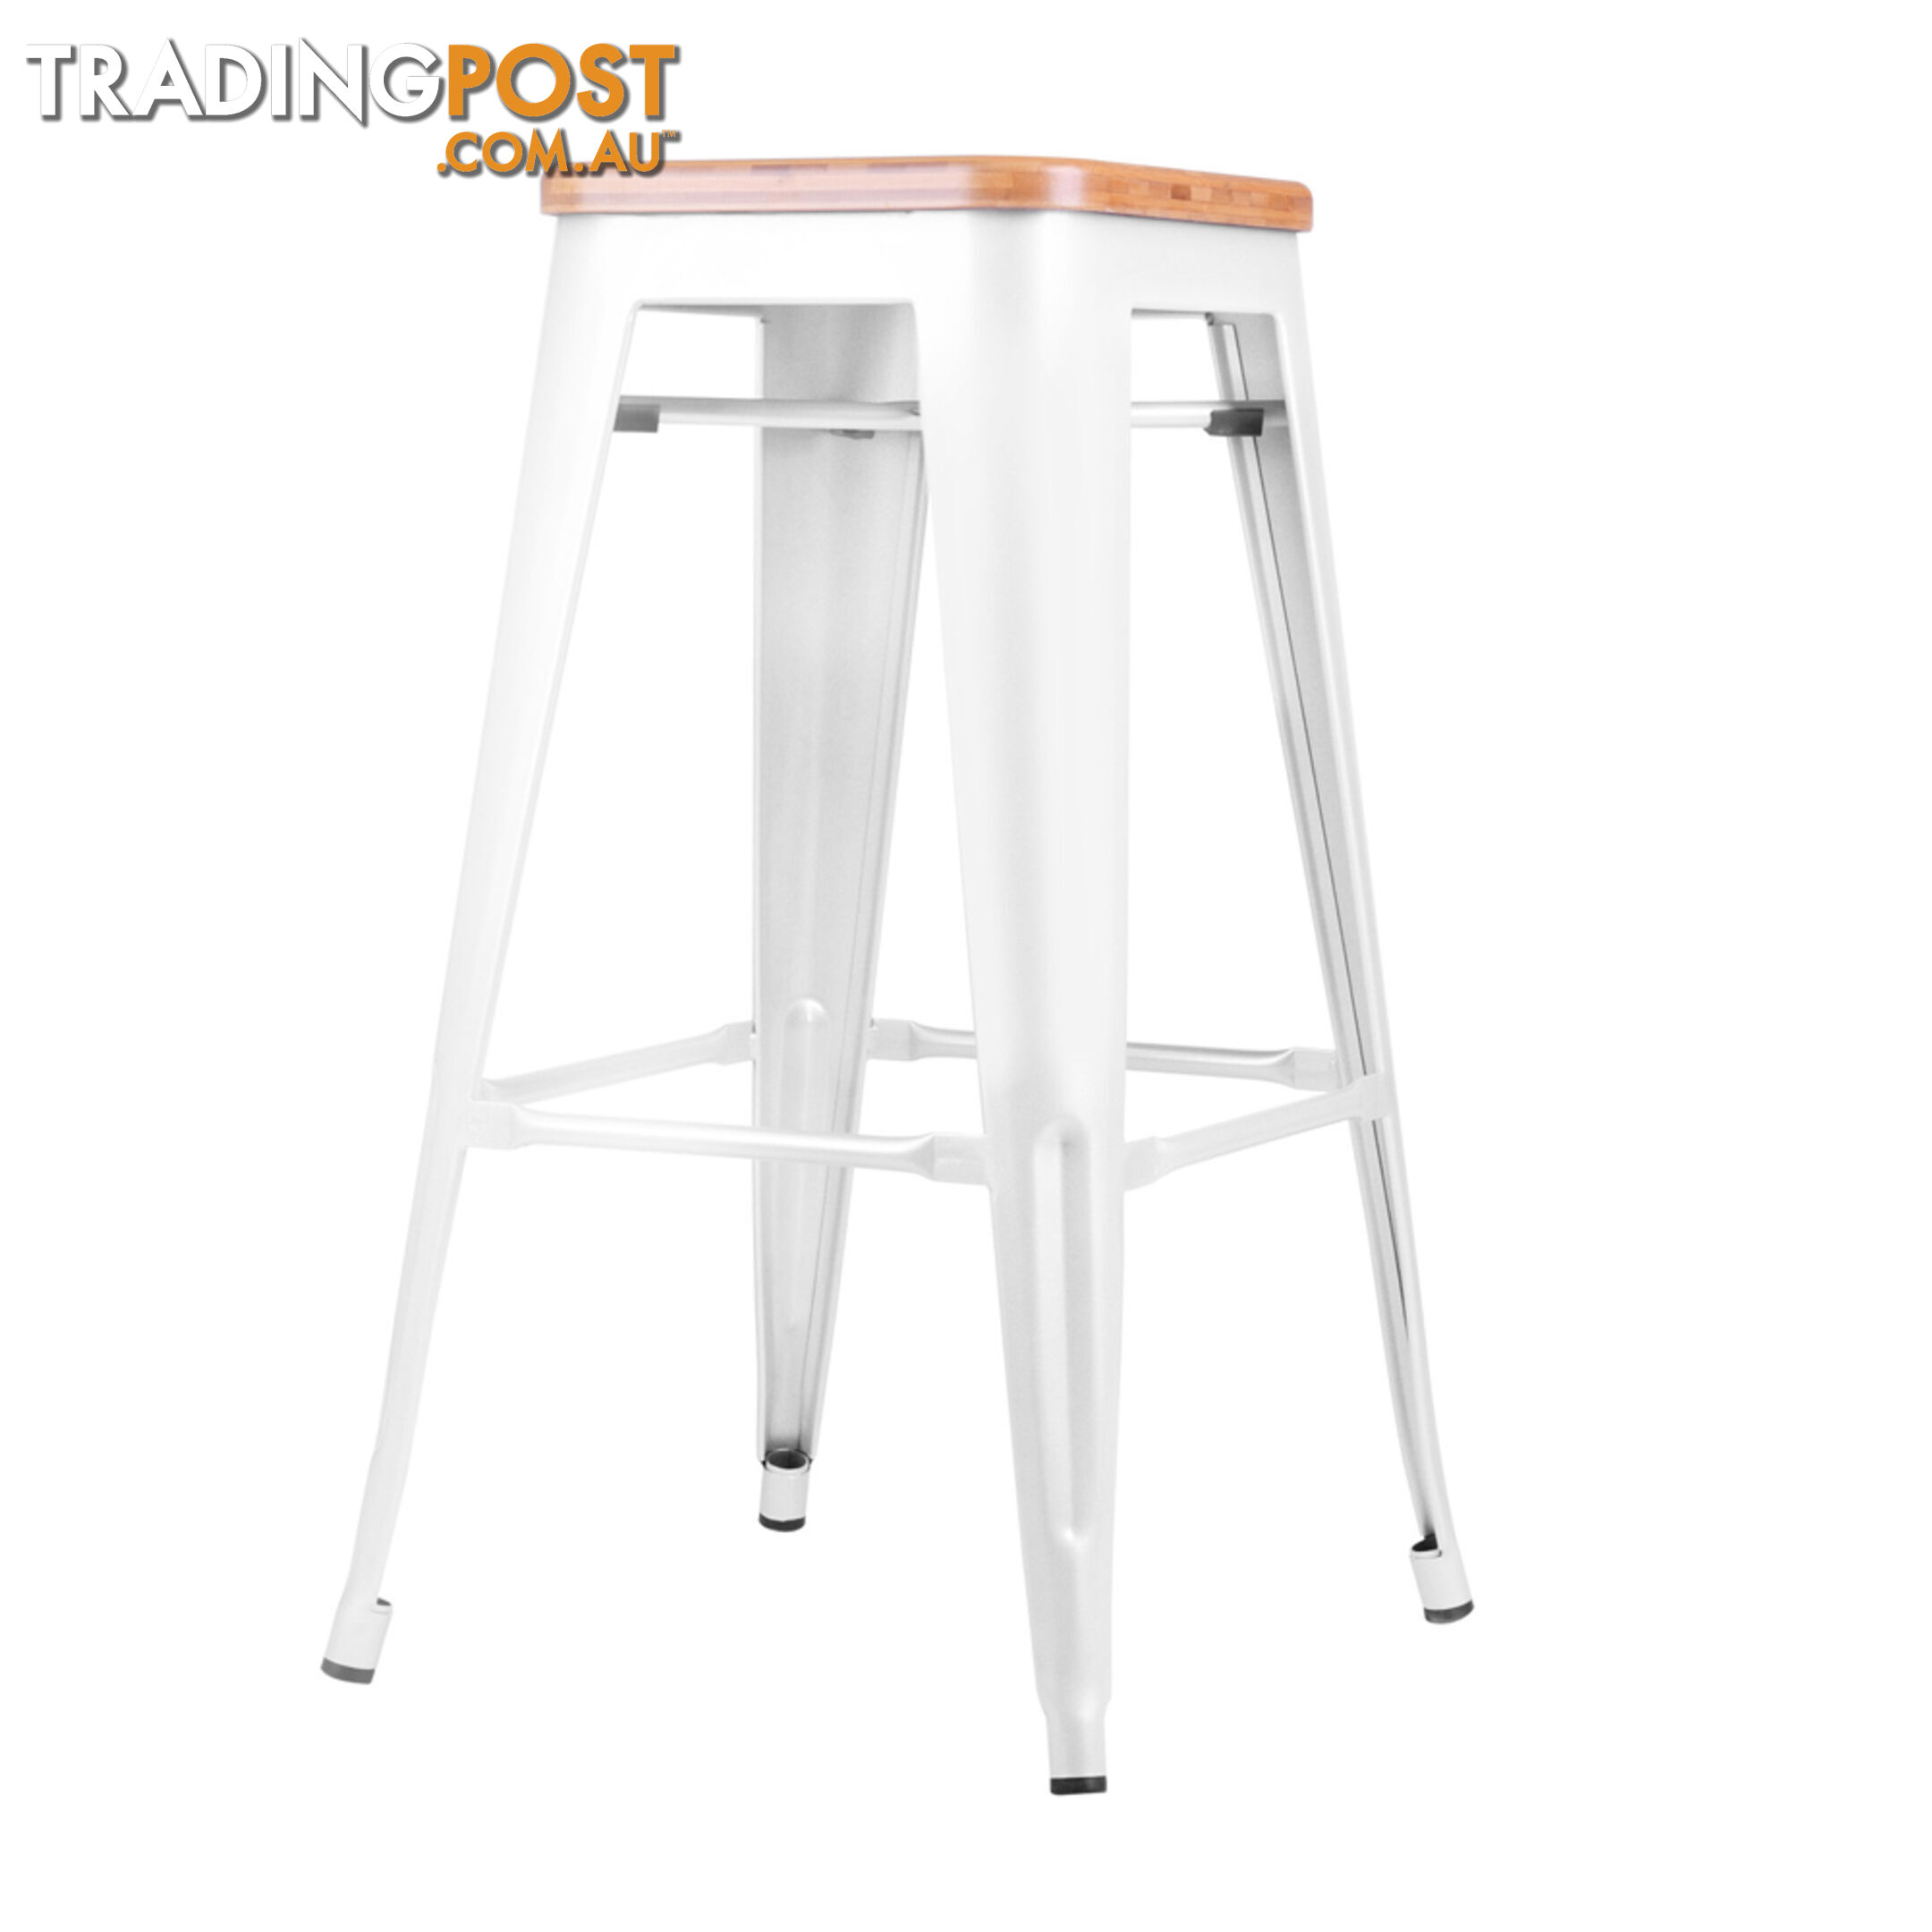 Set of 2 Tolix Replica Metal Steel Bamboo Seat Bar stool 76 cm White